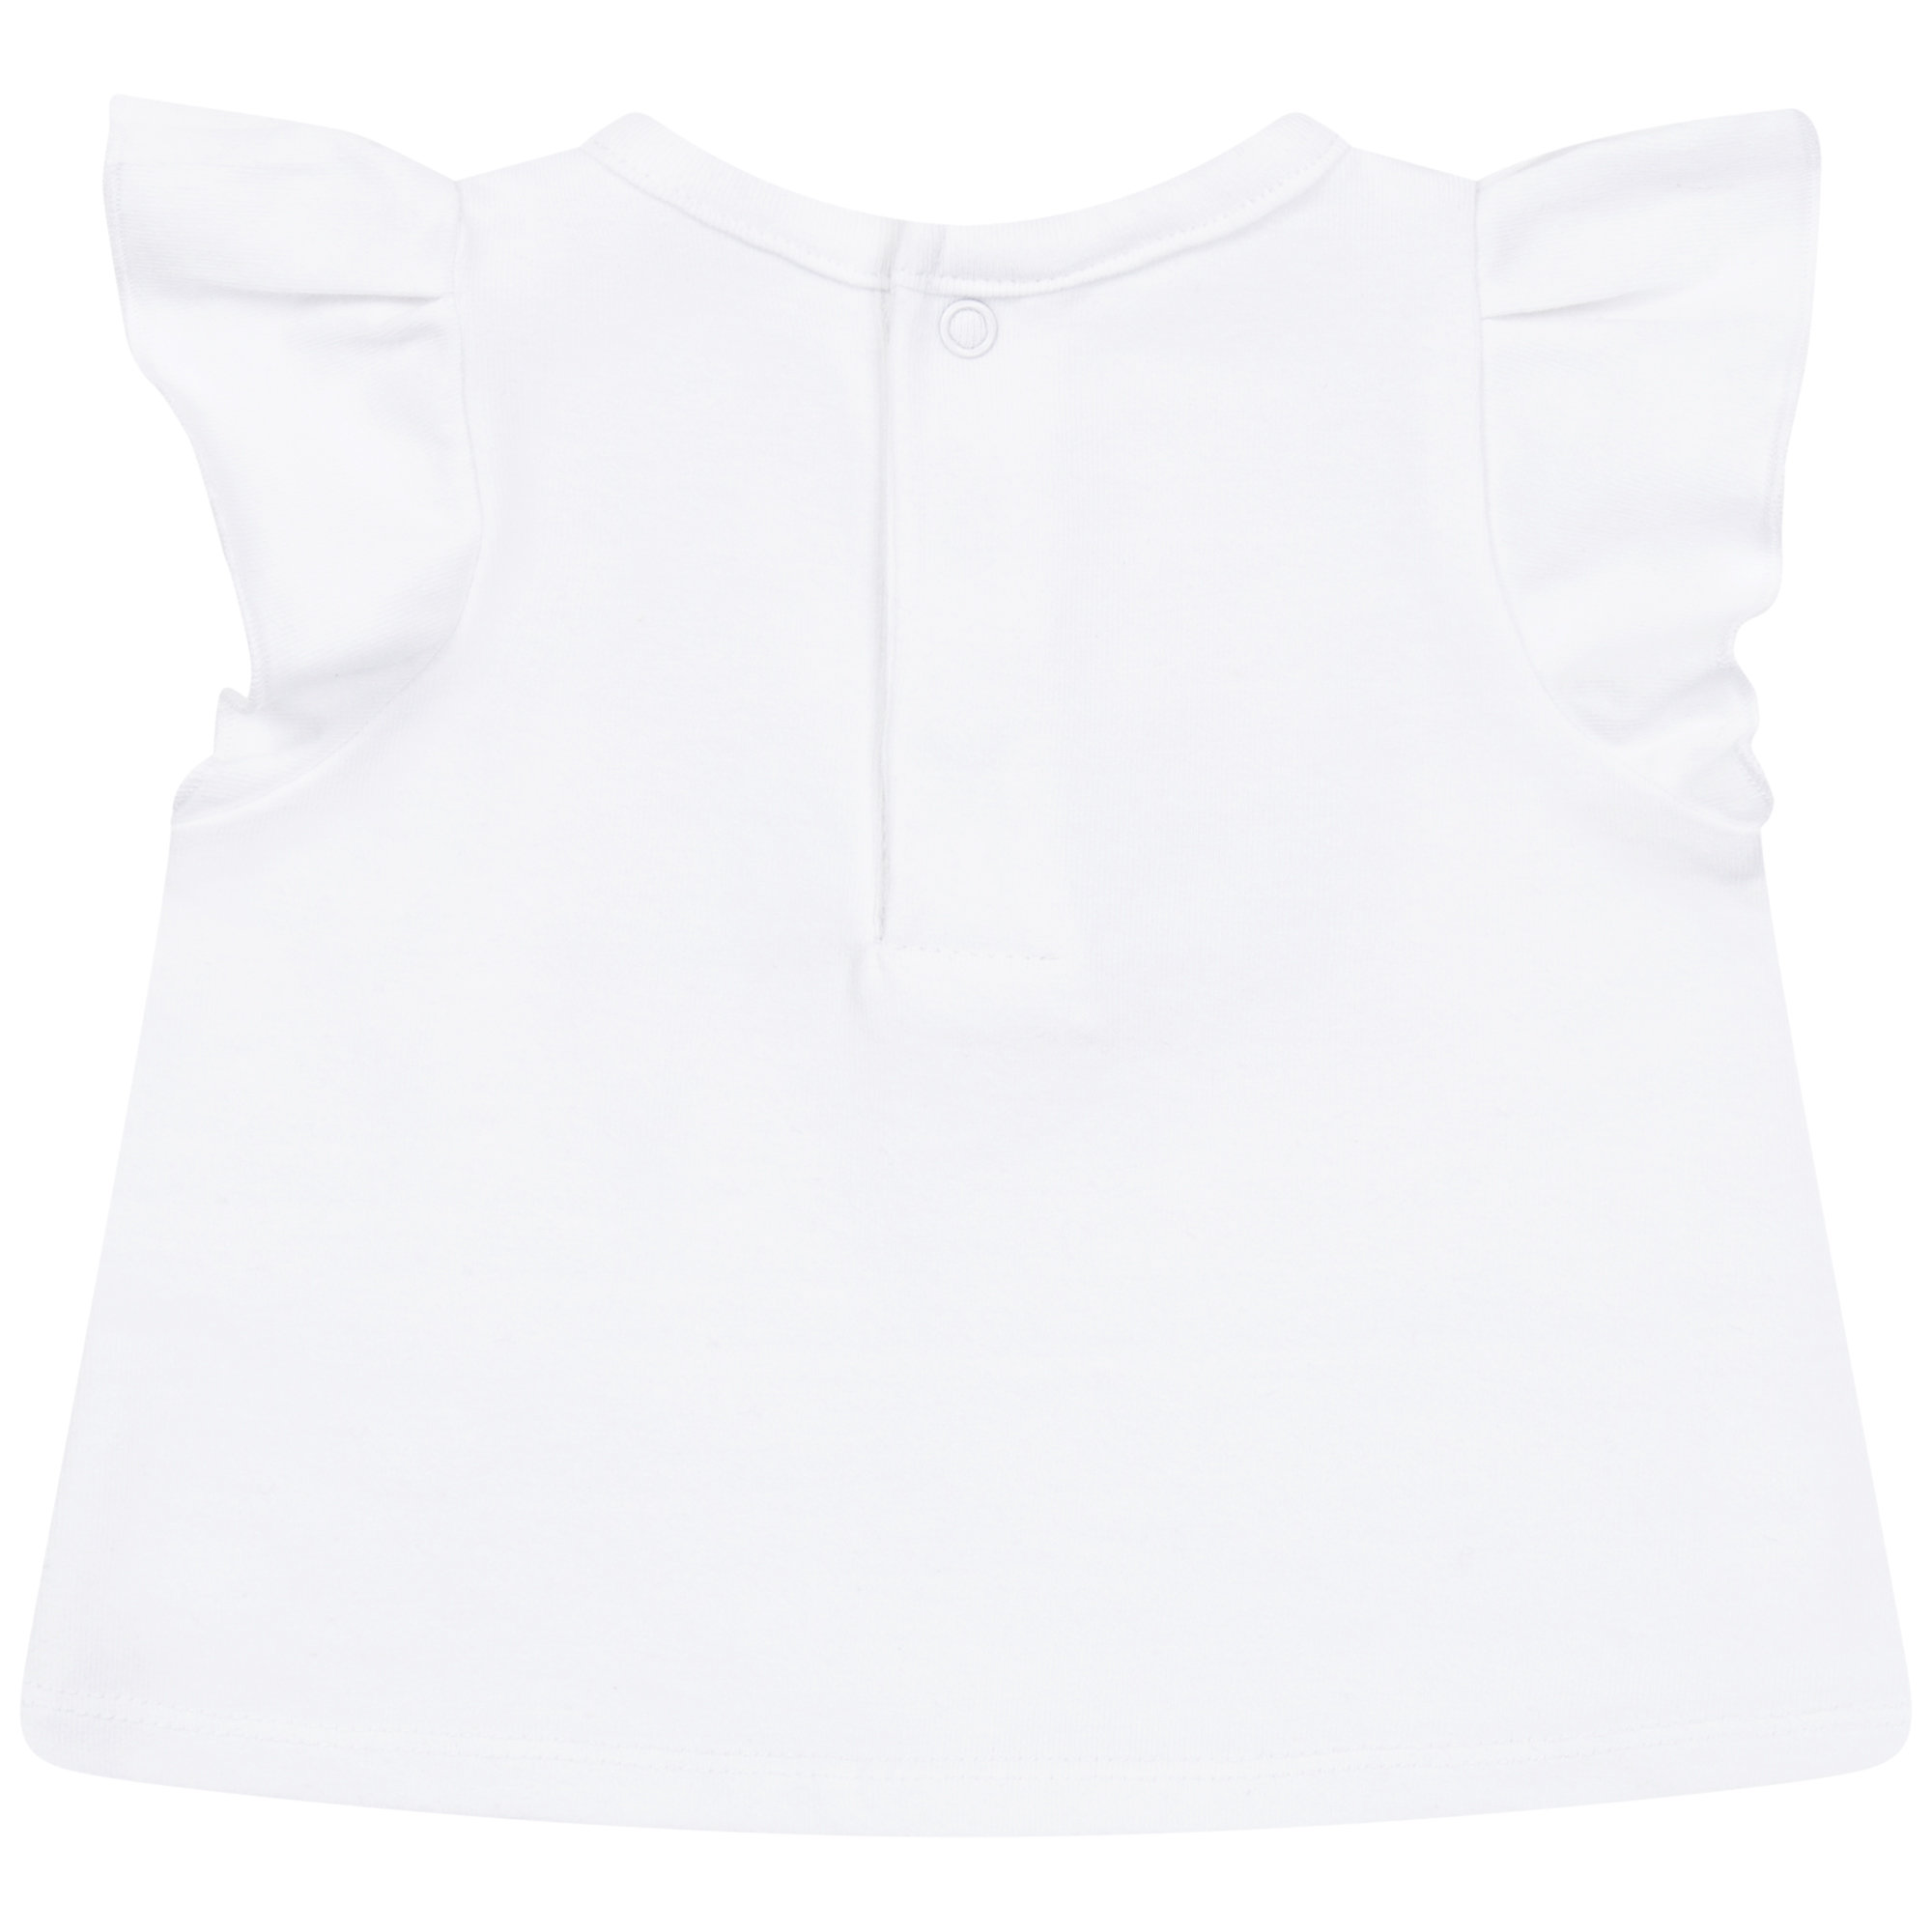 Set t-shirt + shorts KARL LAGERFELD KIDS Per BAMBINA